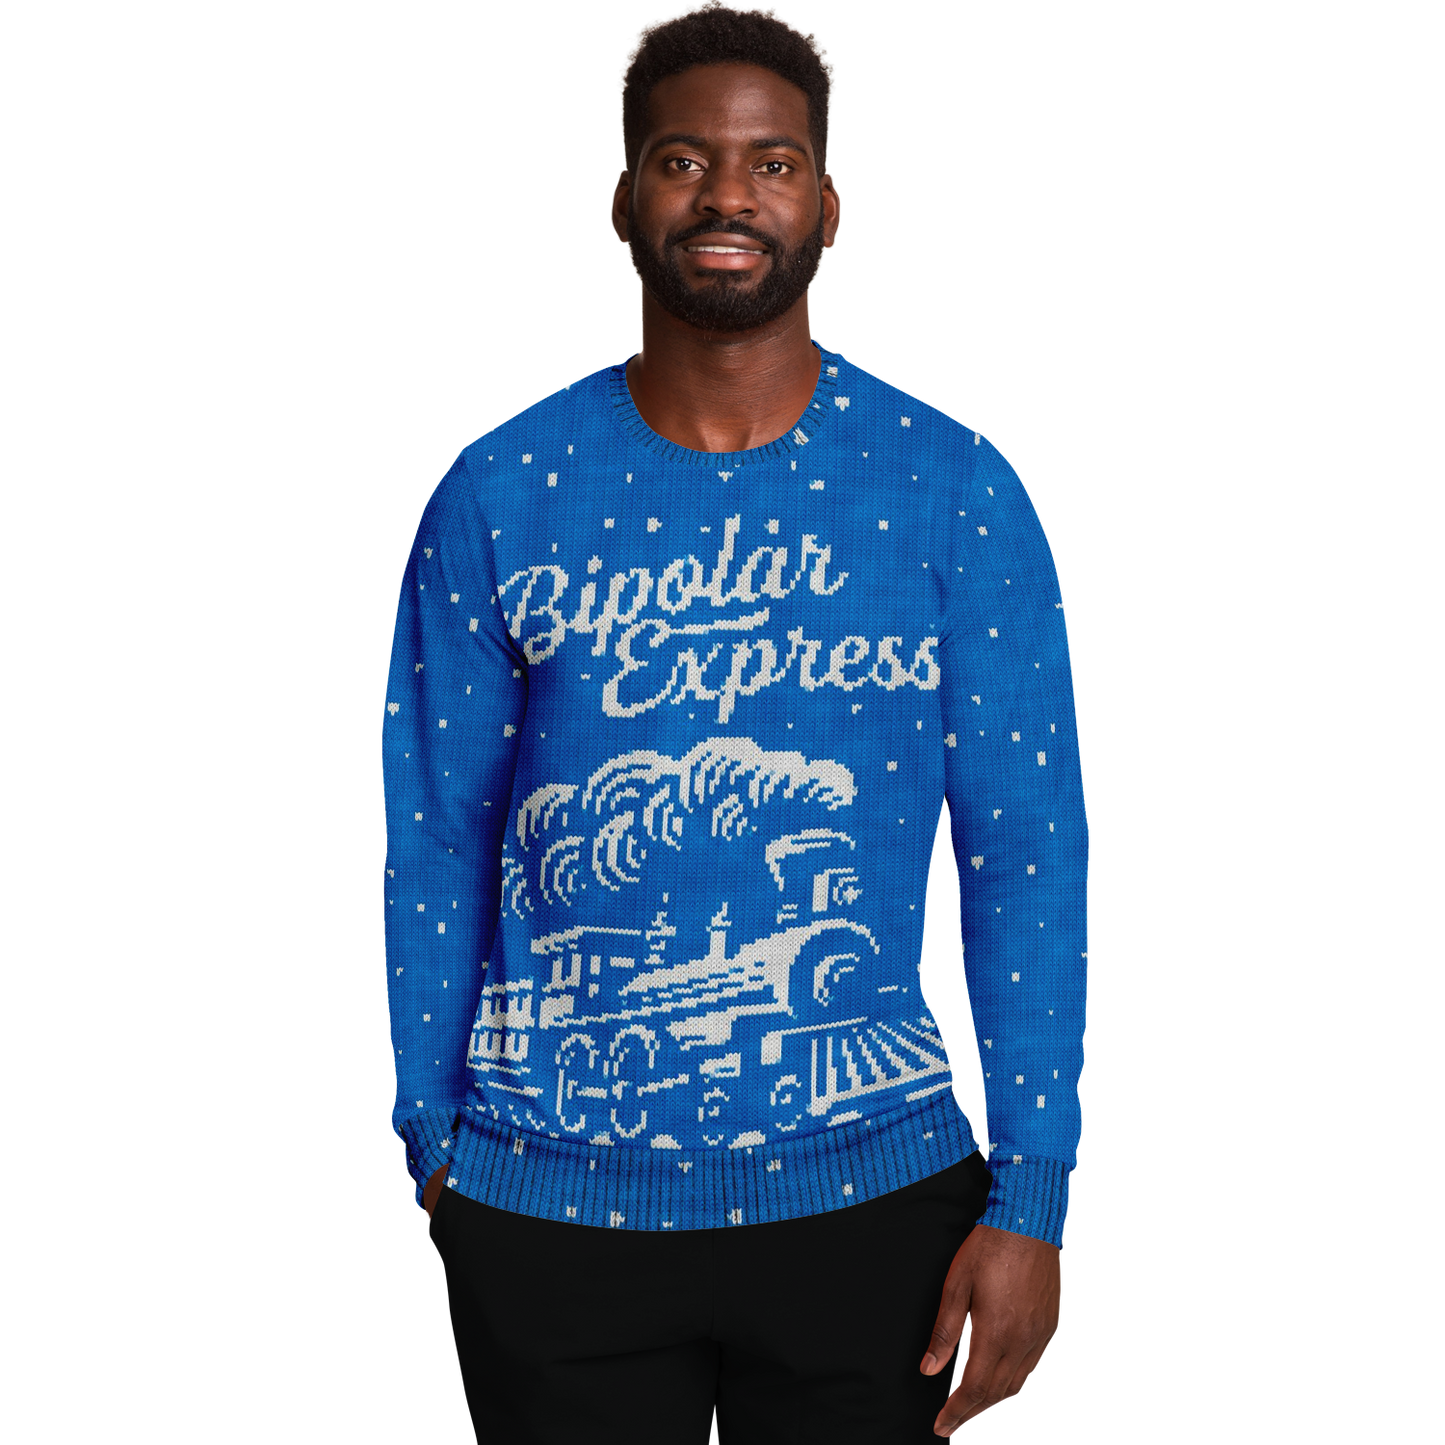 Bipolar Express - Ugly Christmas Sweater